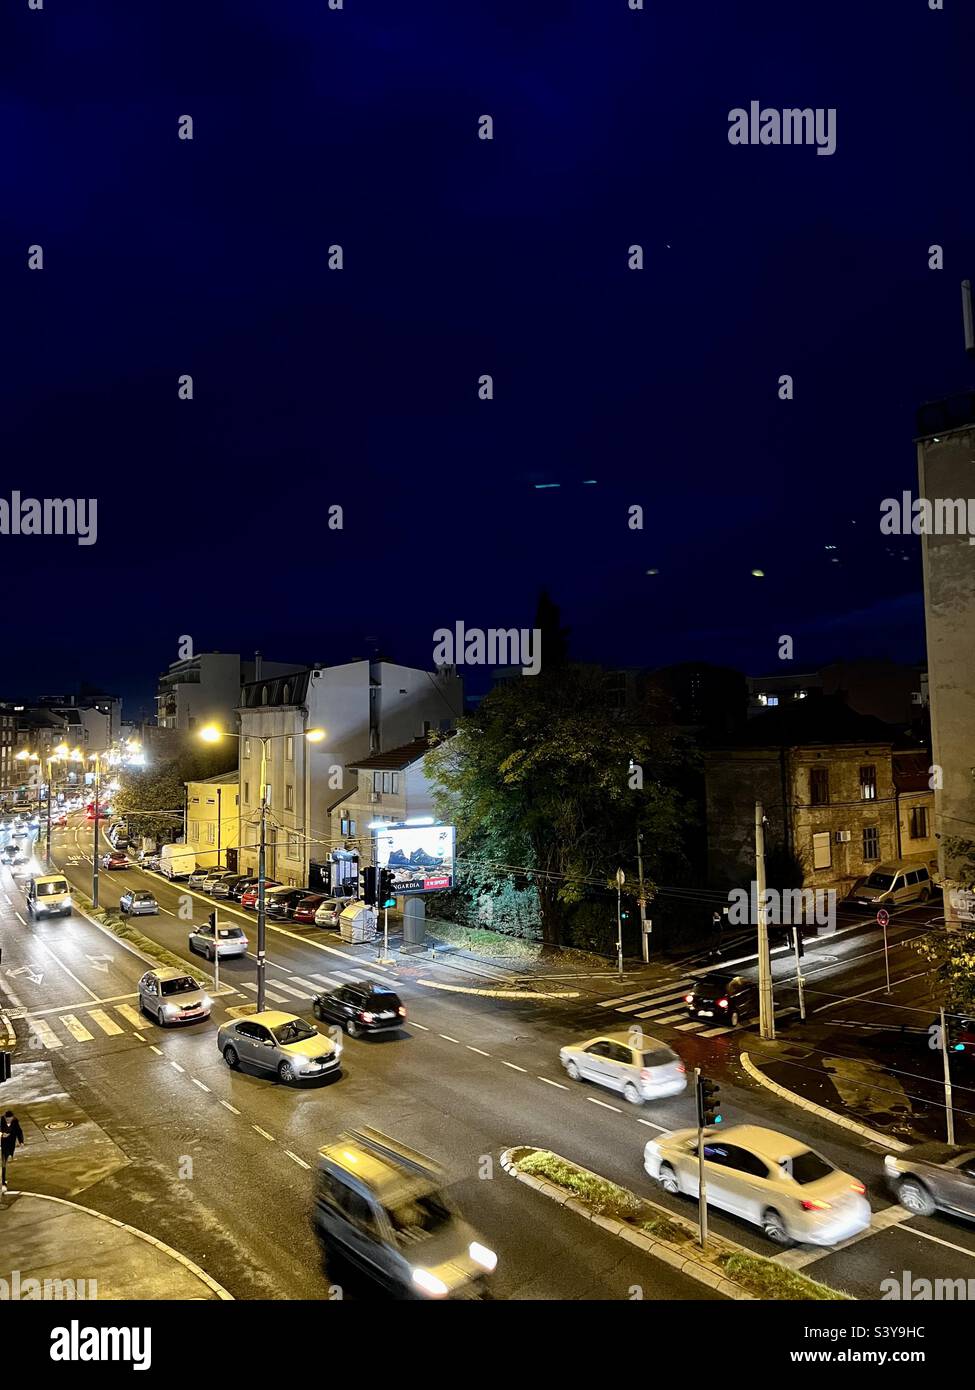 Crossroads and street lights, car lights. Belgrade, Serbia Stock Photo